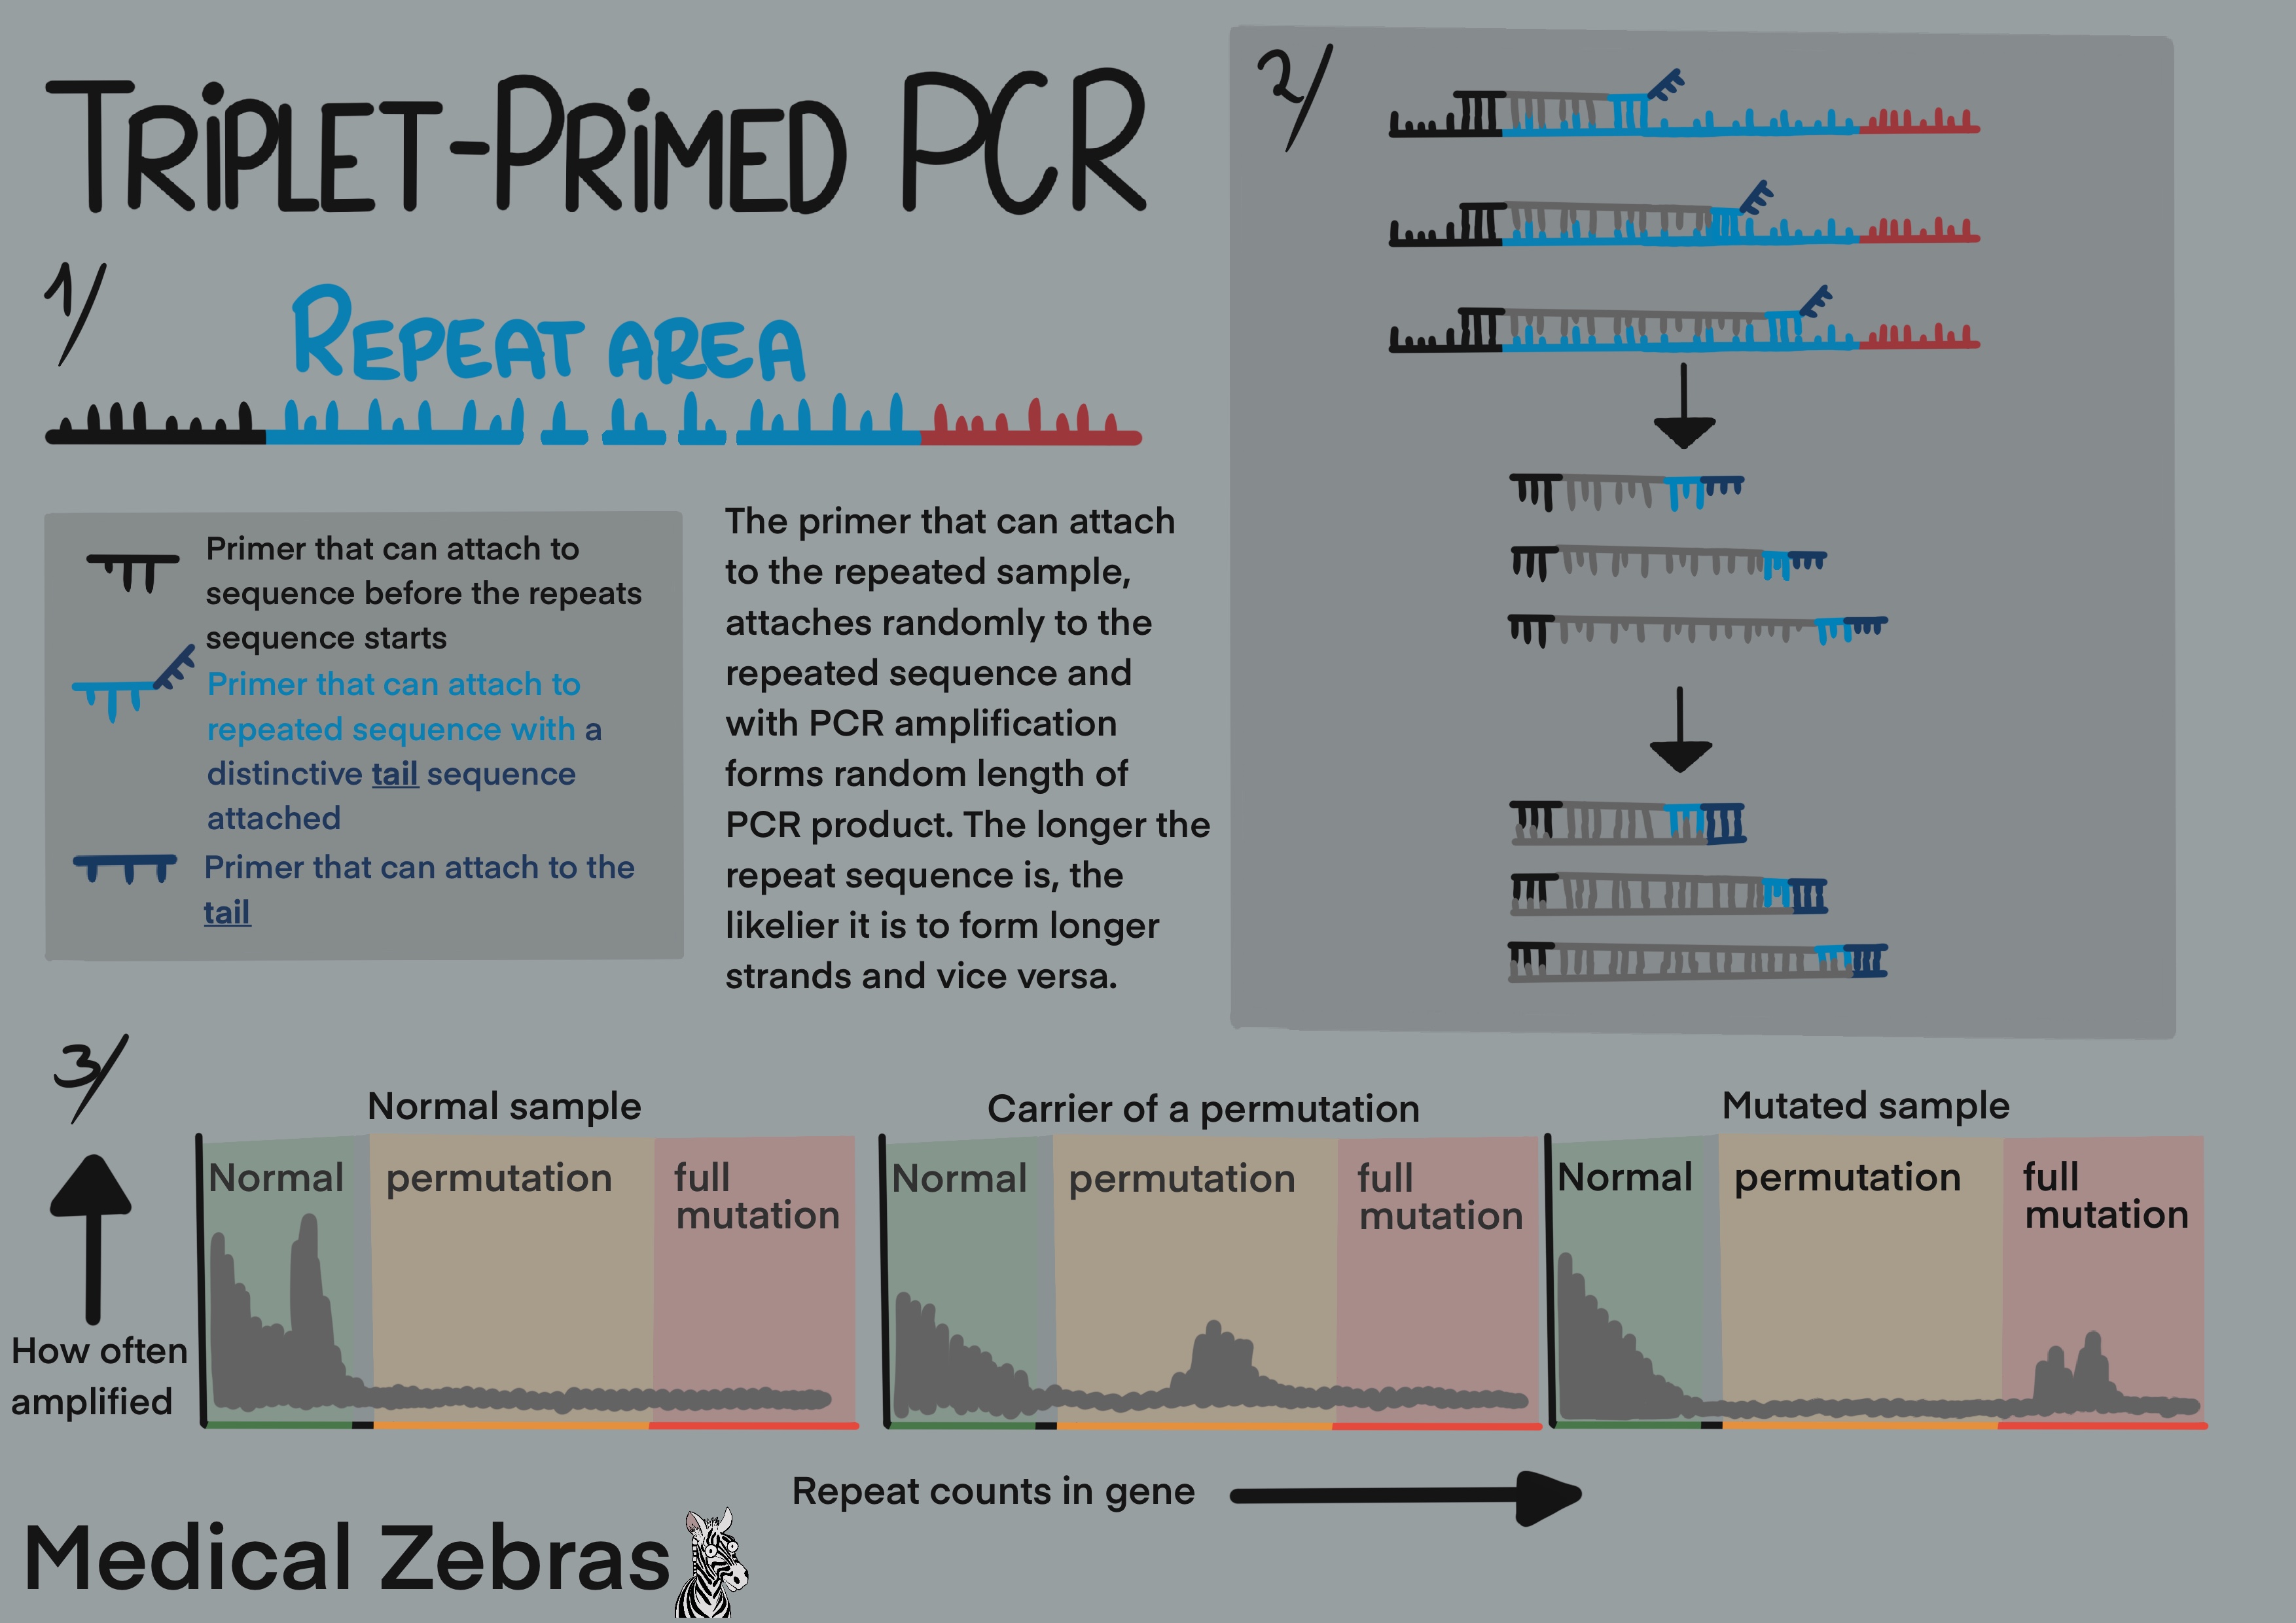 Triple primed PCR explained